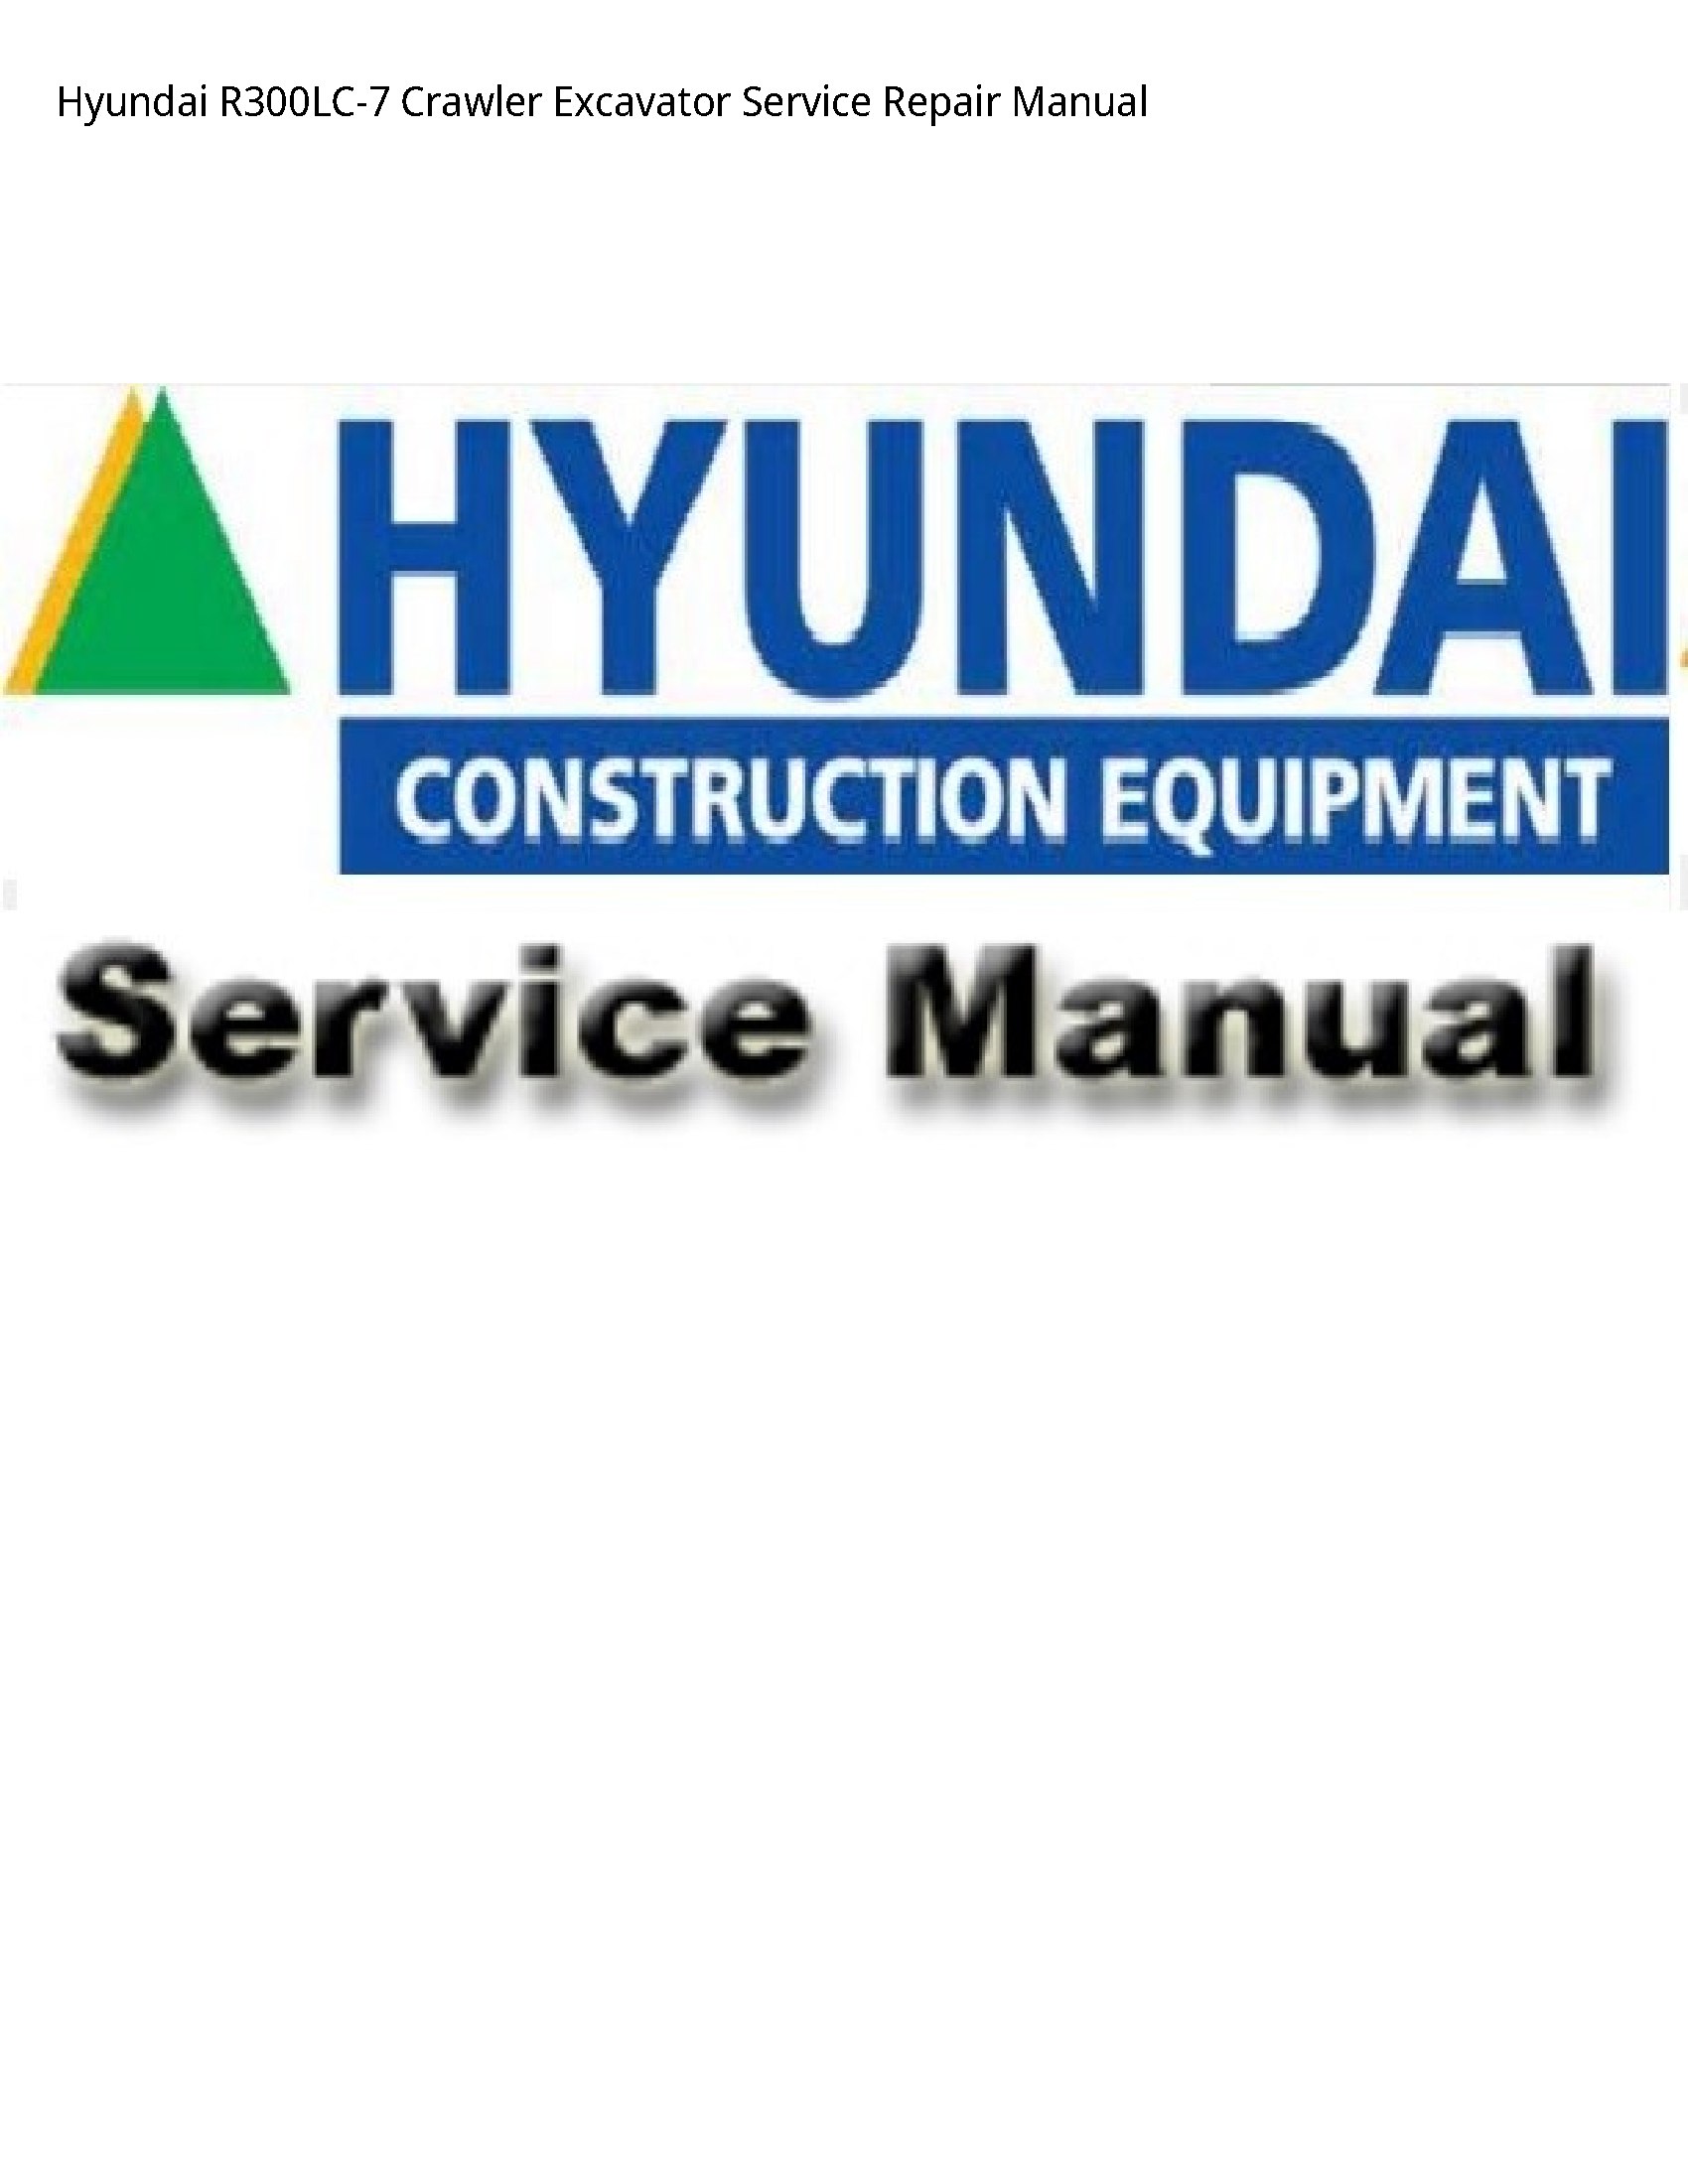 Hyundai R300LC-7 Crawler Excavator manual